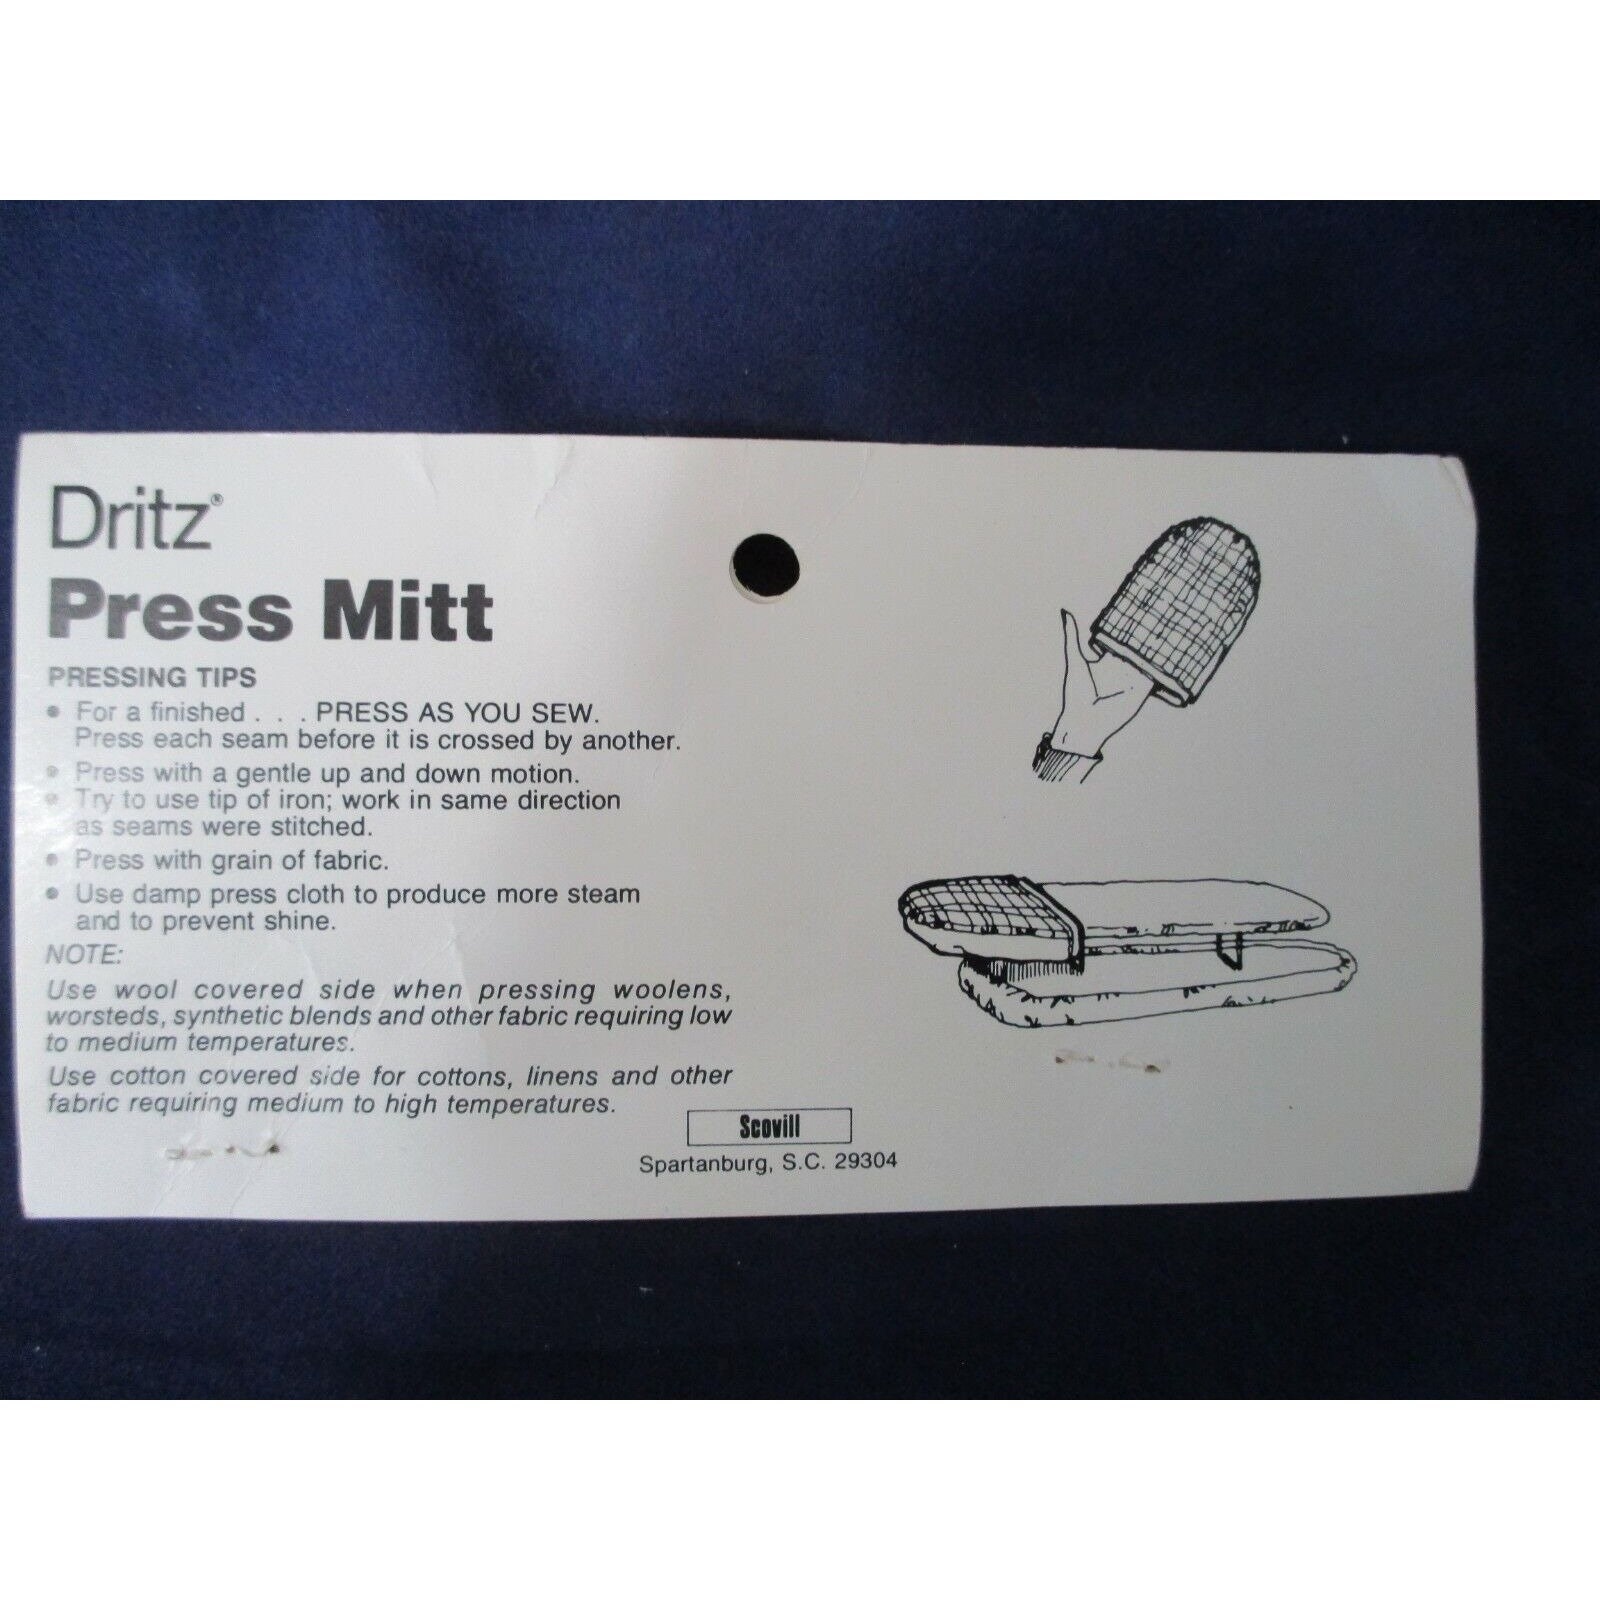 Dritz Cotton Pressing Cloth